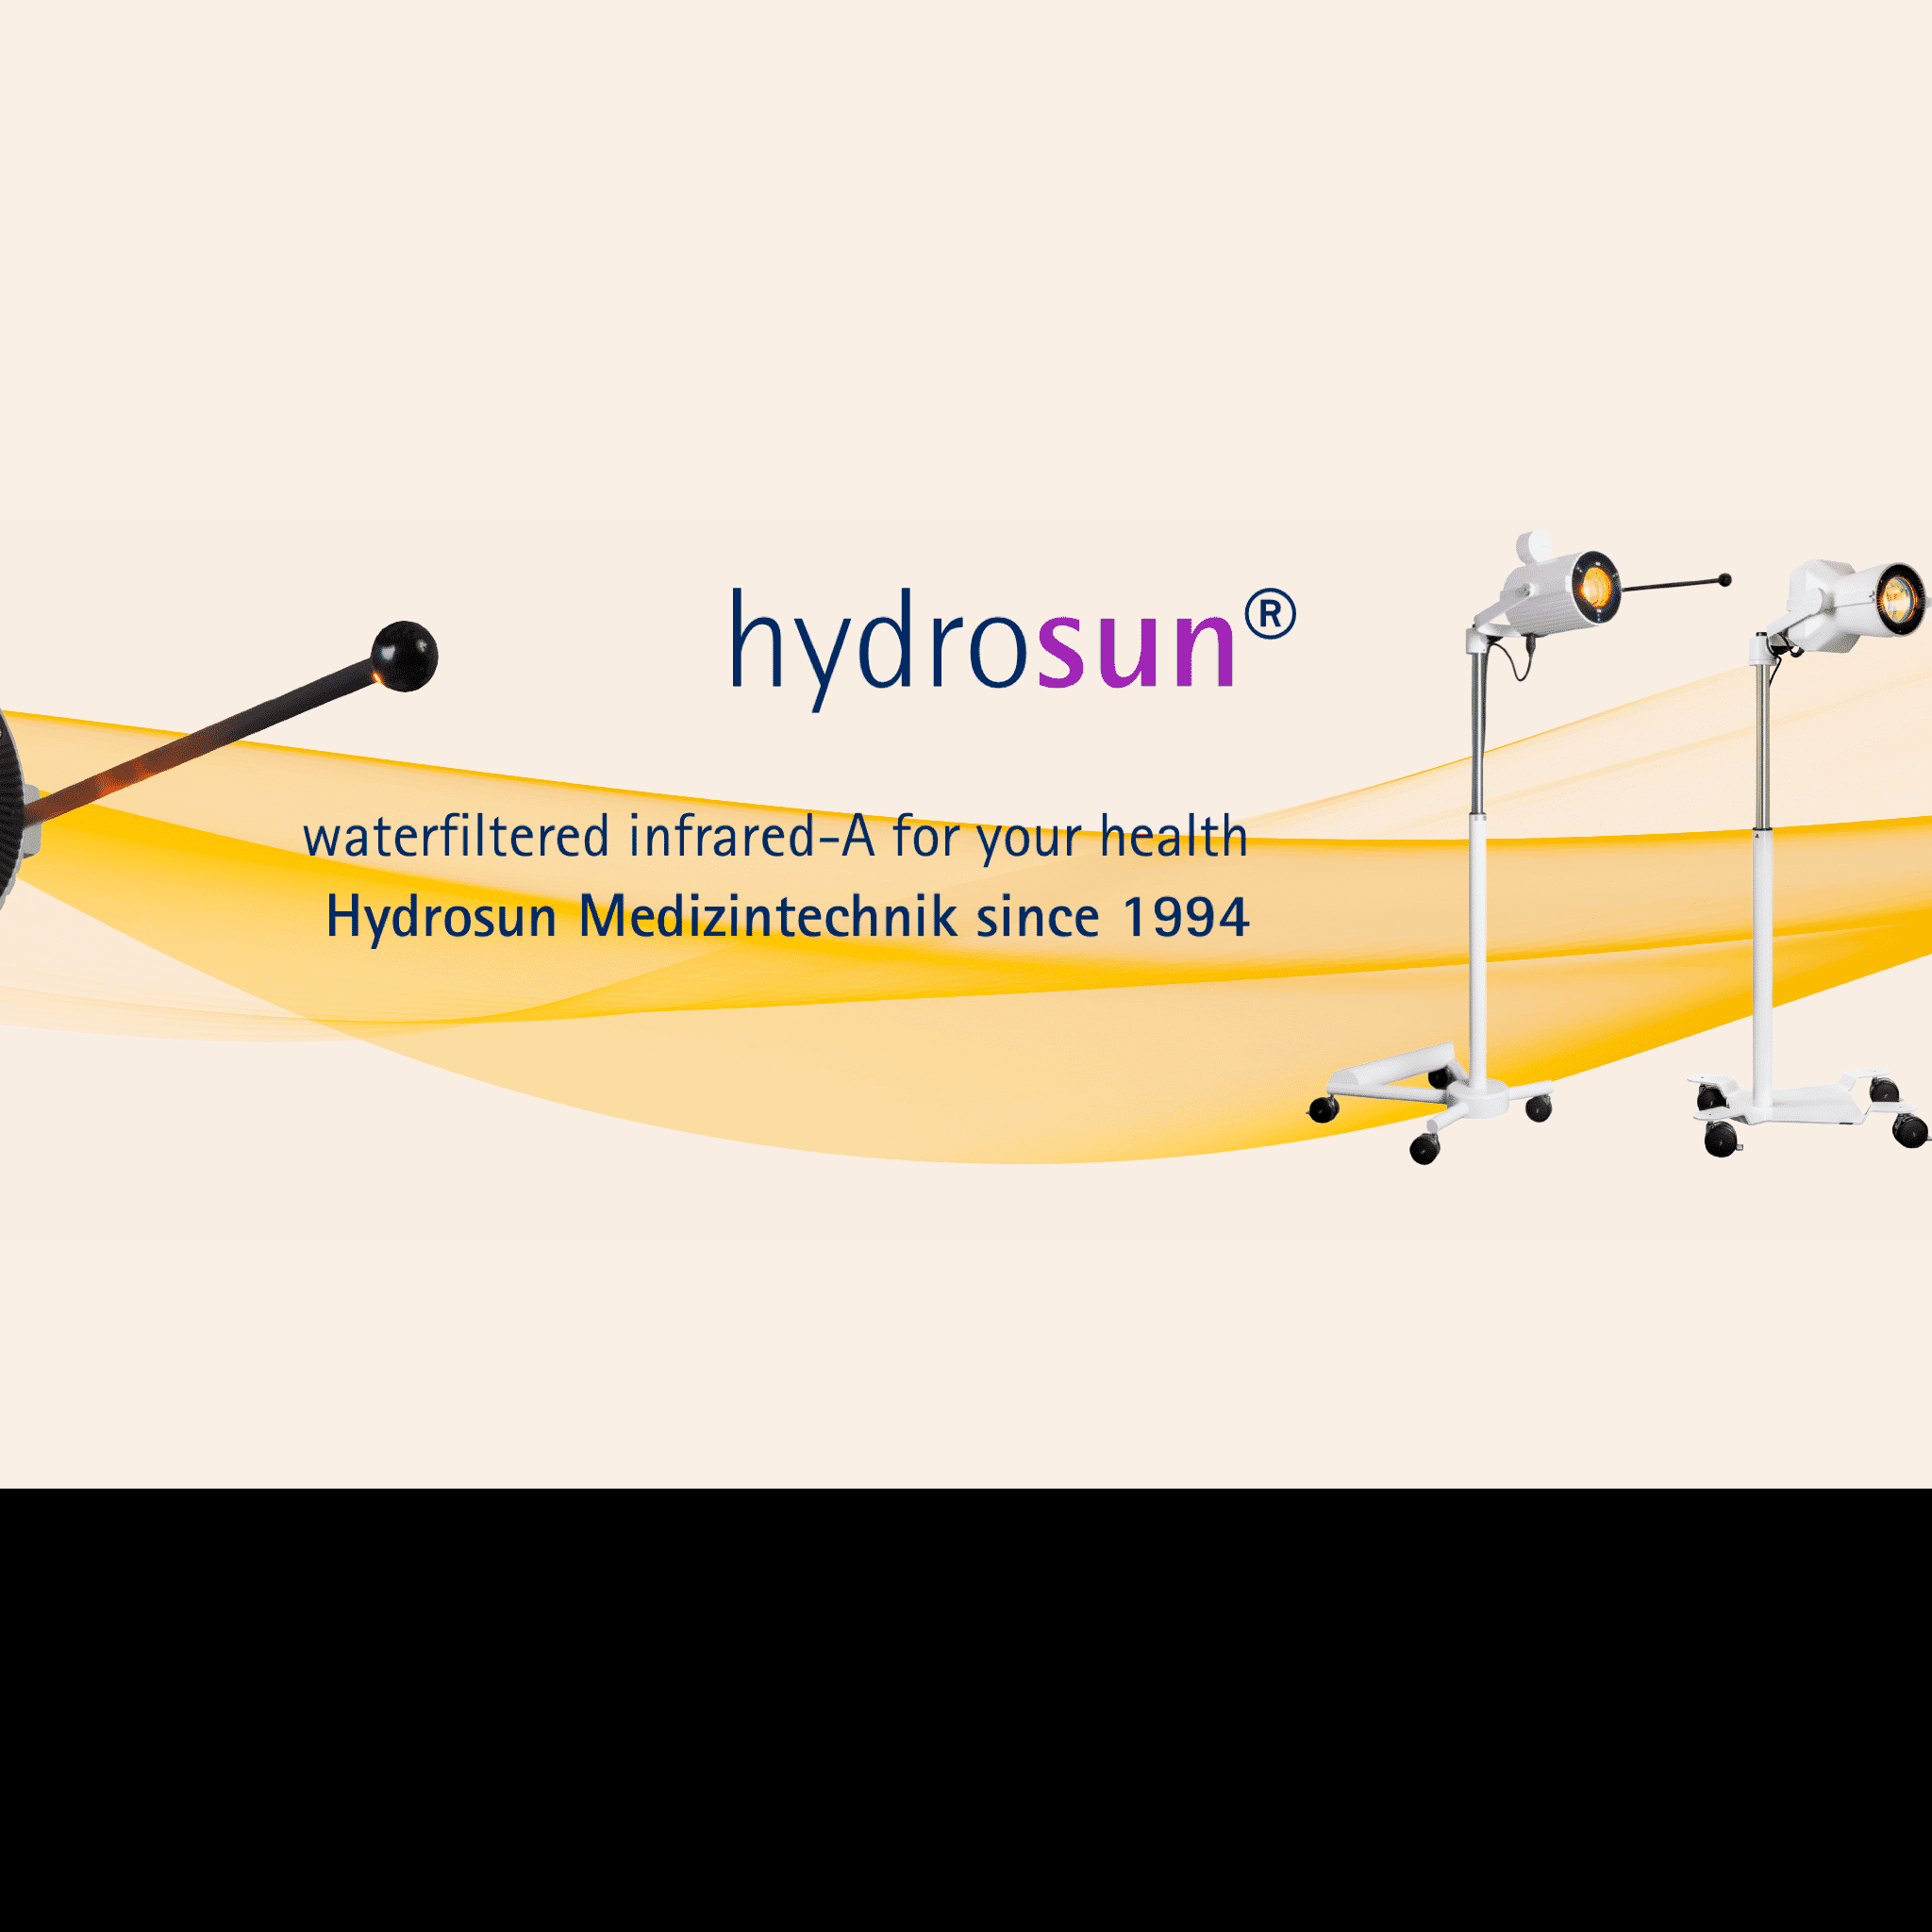 www.hydrosun.eu